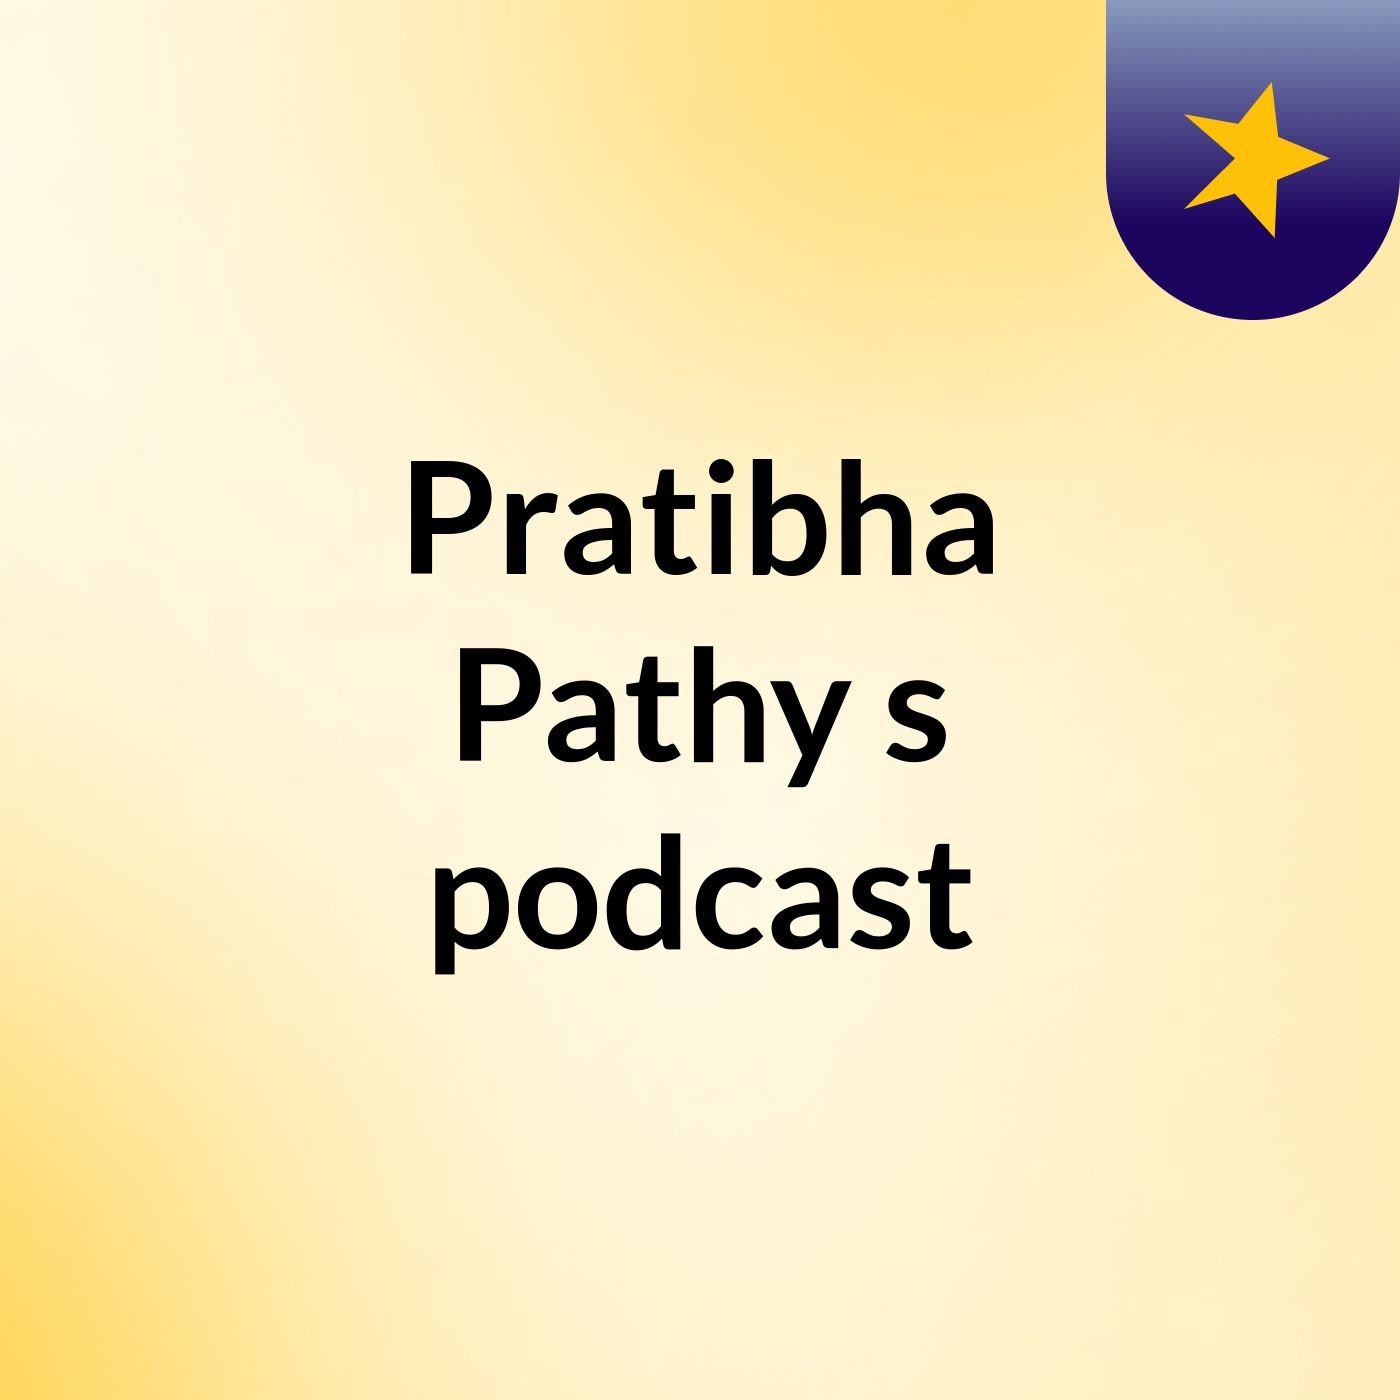 Pratibha Pathy's podcast